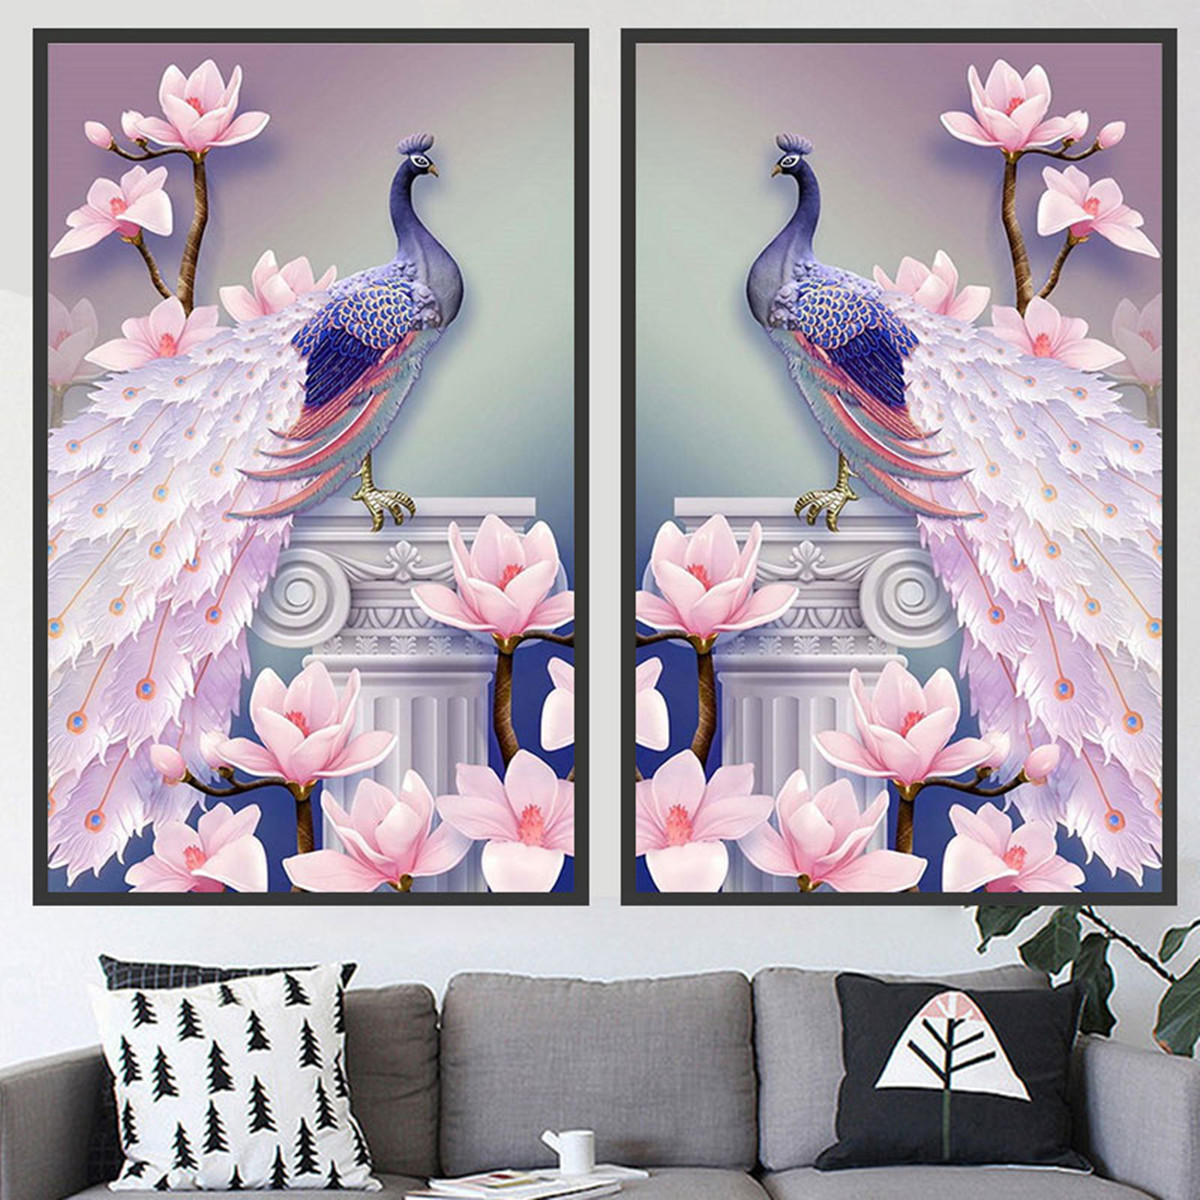 DIY-5D-Diamond-Painting-Magnolia-Peacock-Art-Craft-Embroidery-Stitch-Kit-Handmade-Wall-Decorations-G-1285865-10